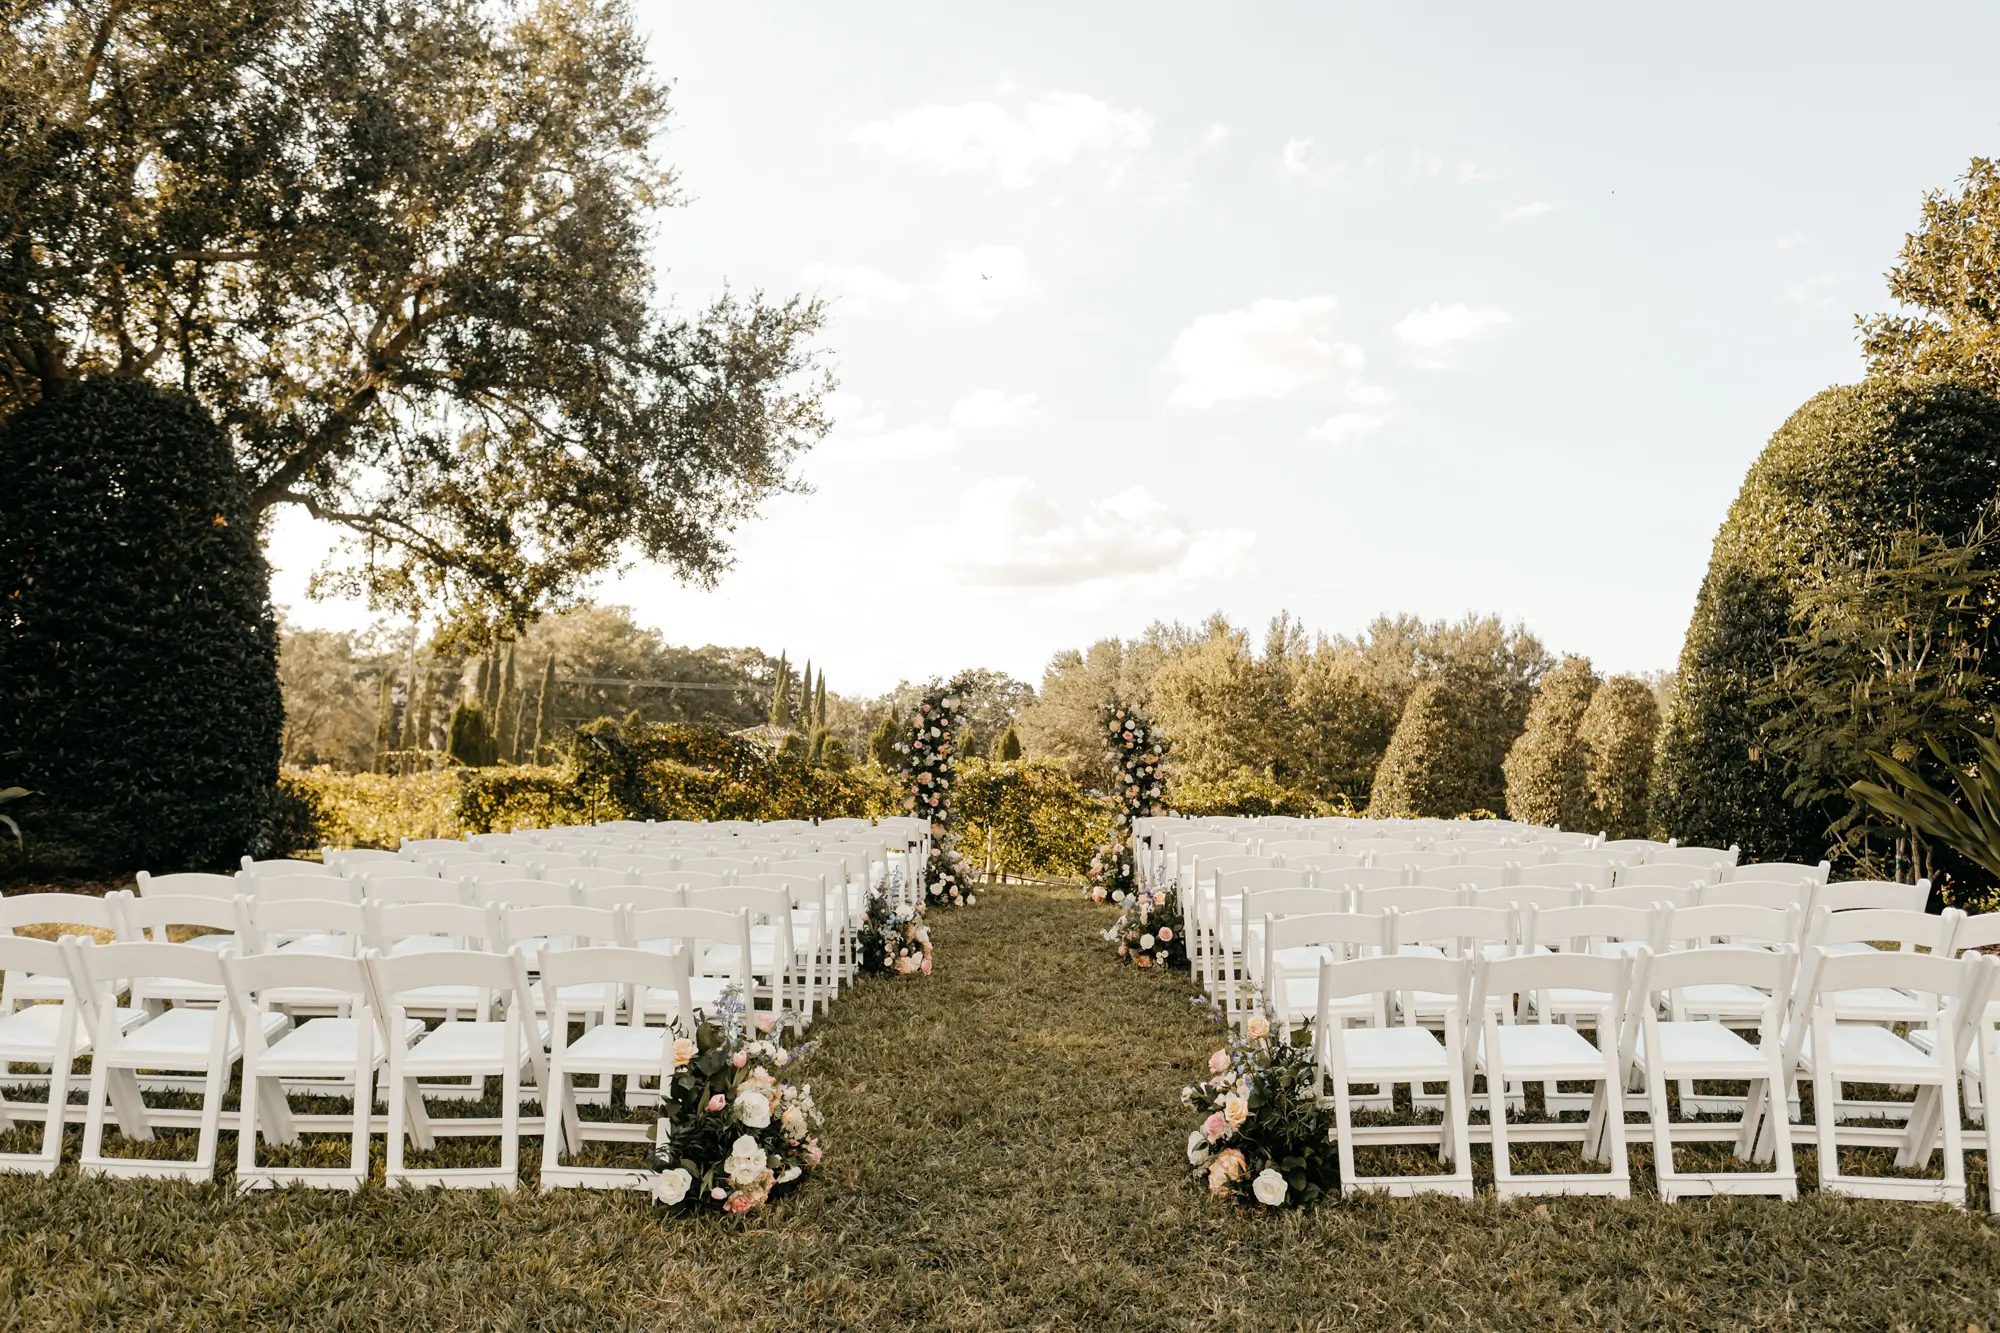 Spring Outdoor Vineyard Wedding Ceremony Decor Inspiration | White Folding Garden Chairs | Tampa Bay Event Planner Coastal Coordinating | Venue Mision Lago Estate